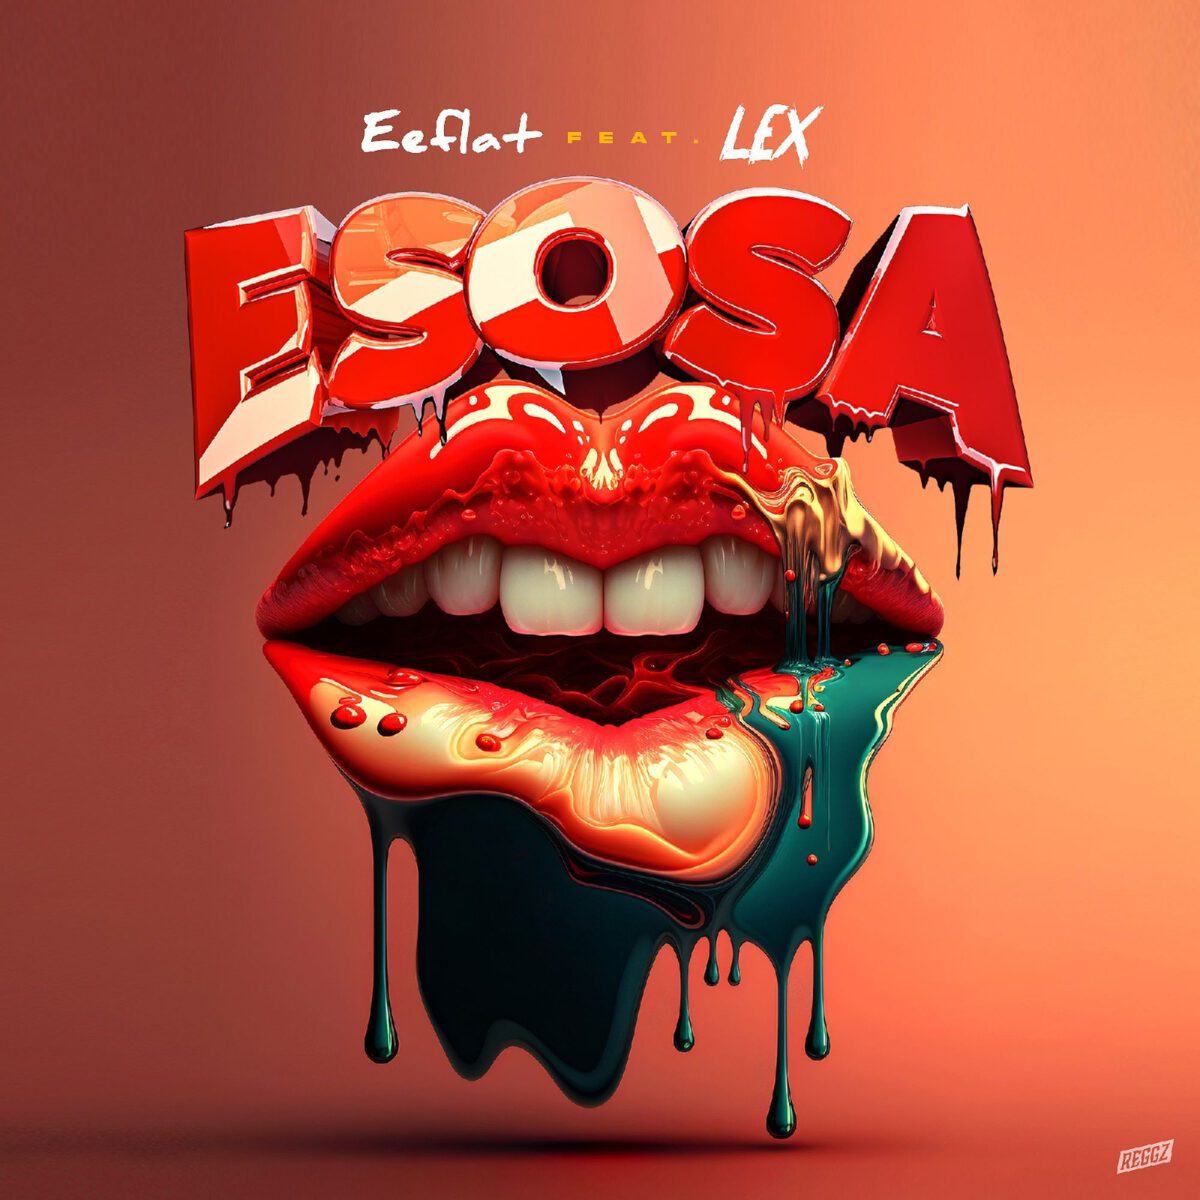 TMAQTALK MUSIC: Eeflat - Esosa (Who is Esosa)